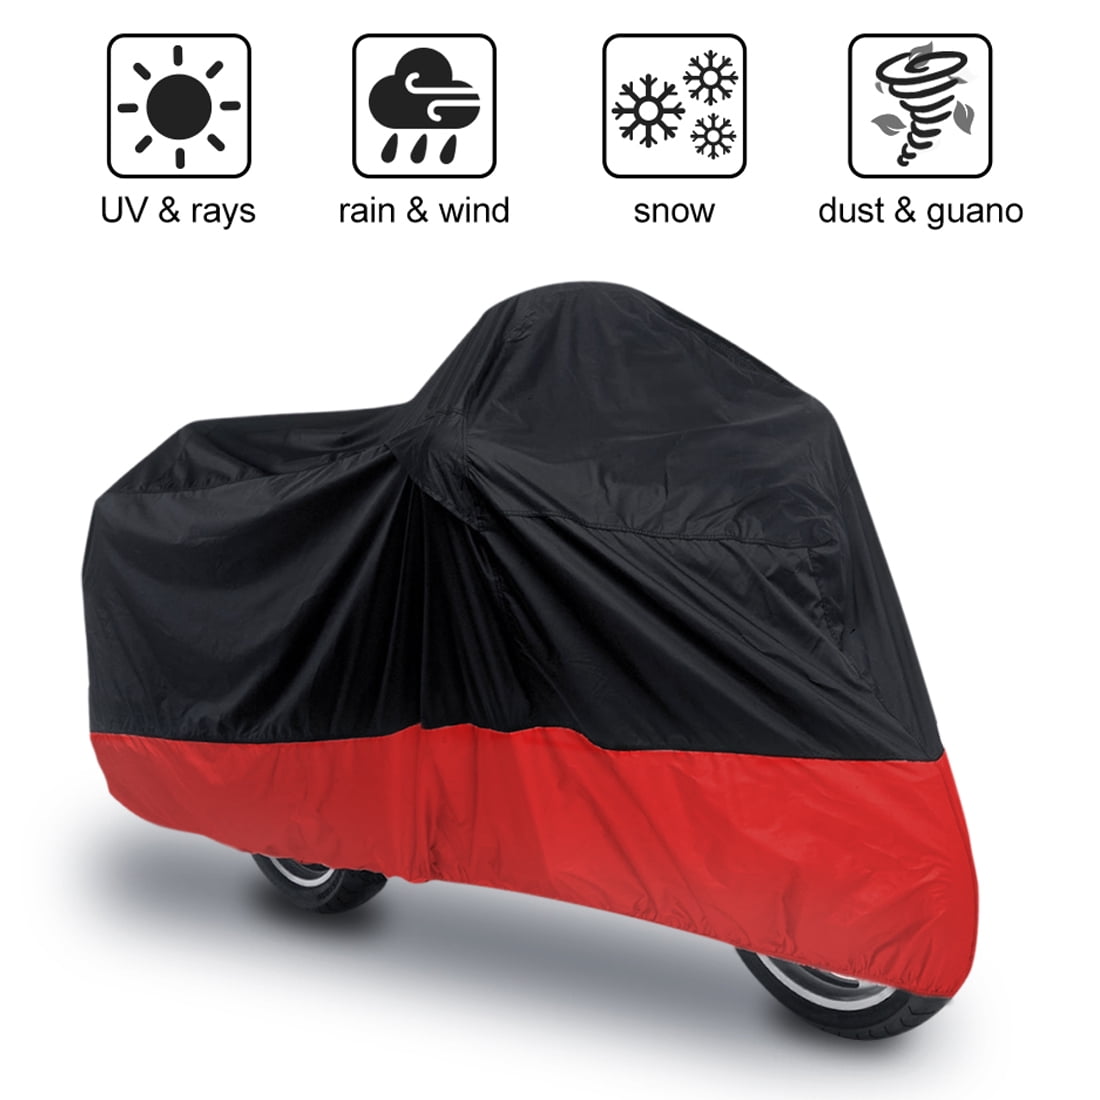 XXXL 180T Full Motorcycle Cover Black Red Outdoor UV Rain Waterproof Protector 